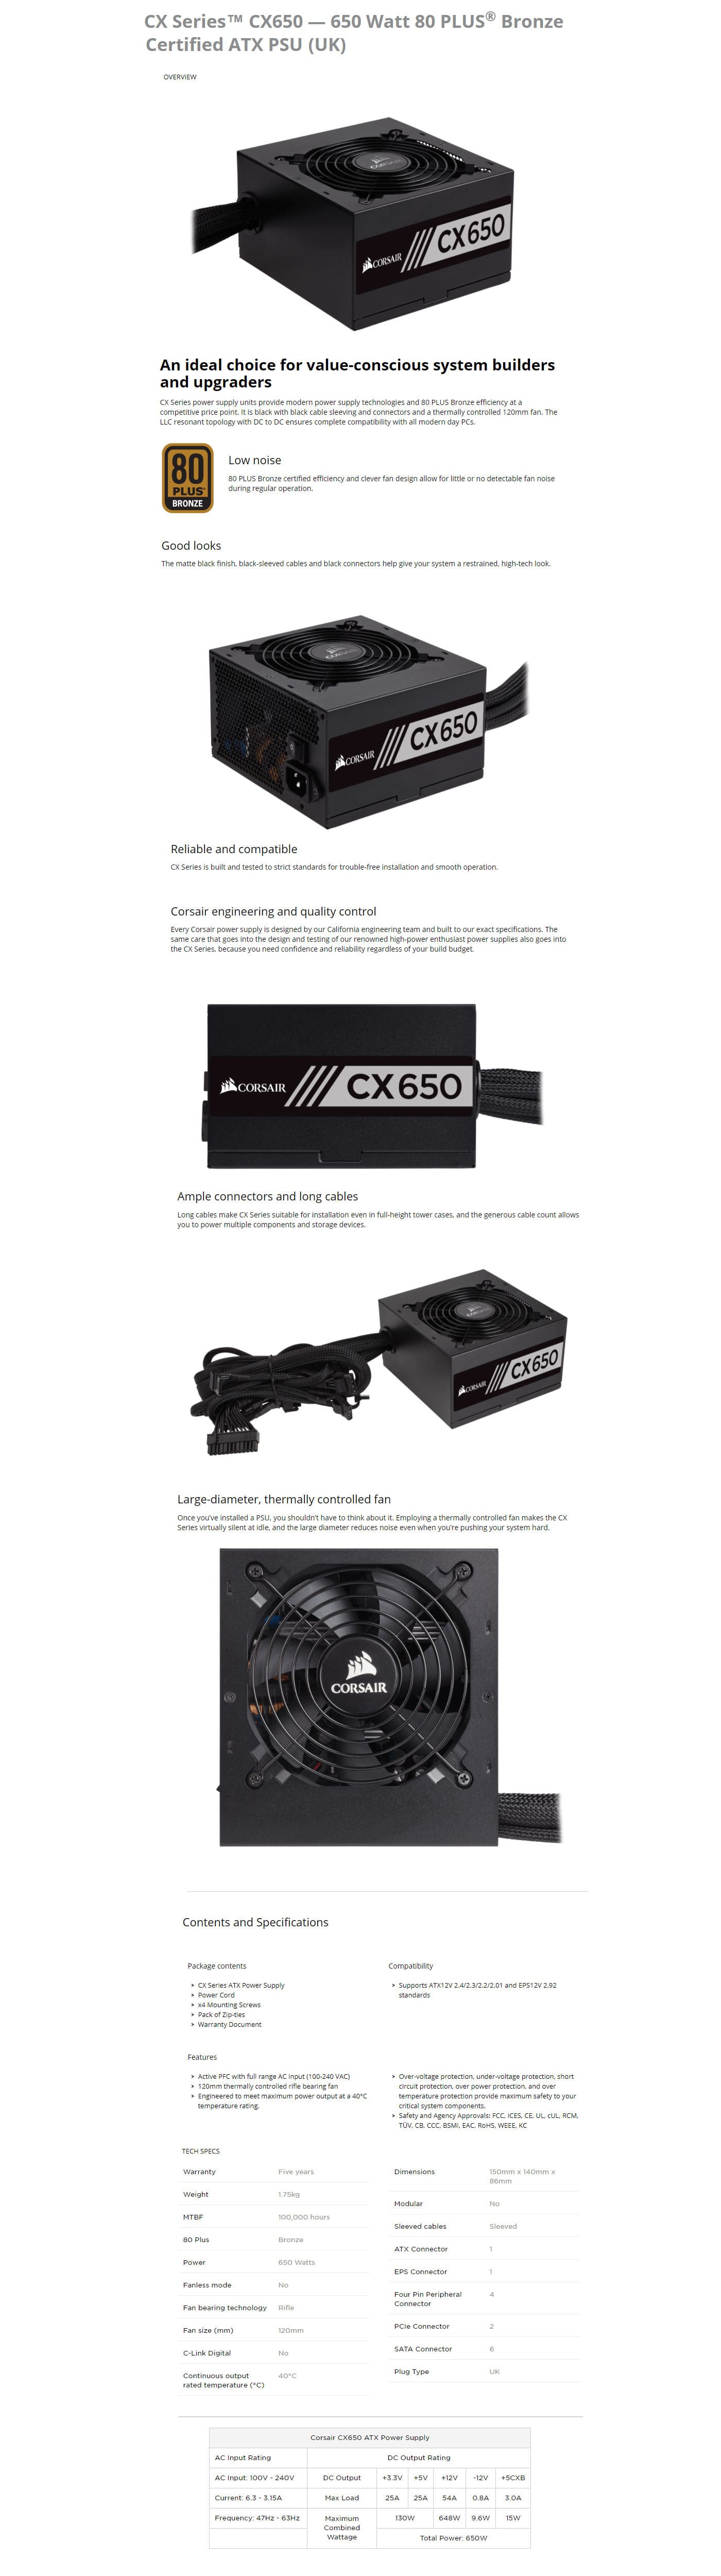 Corsair CX Series CX650 650 Watt 80 Plus Bronze Certified ATX PSU features